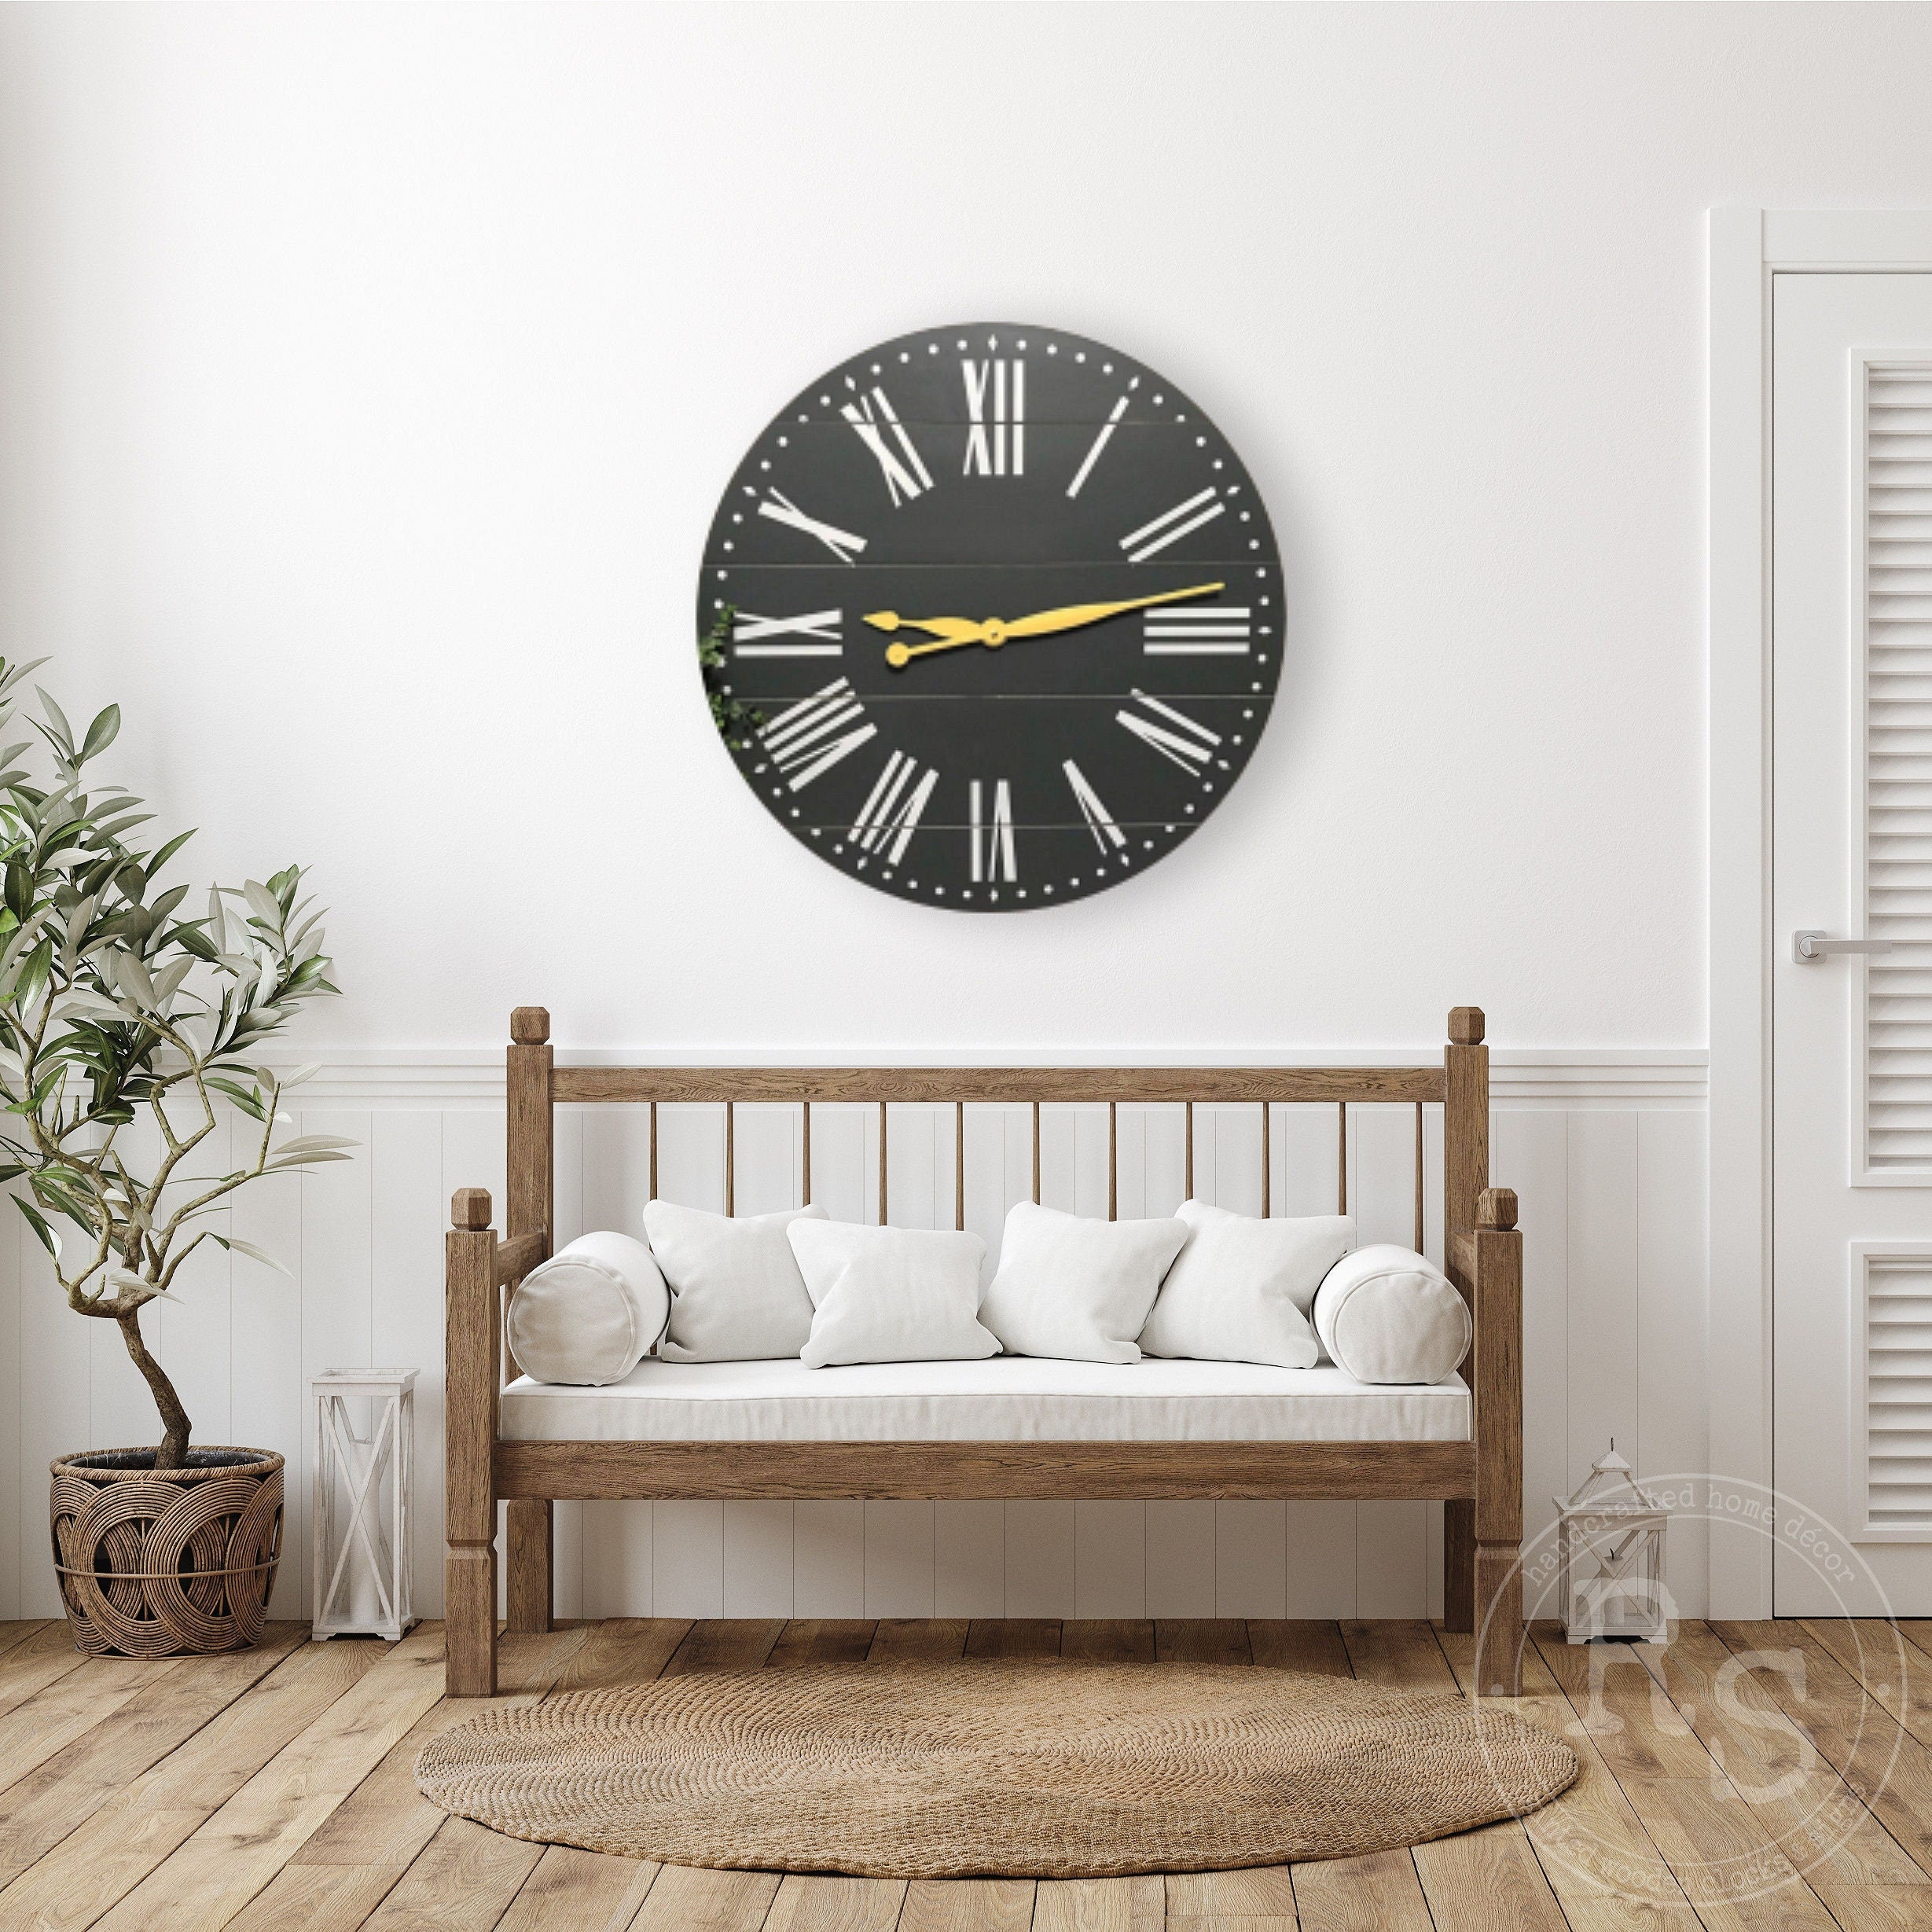 The Emma Wooden Wall Clock